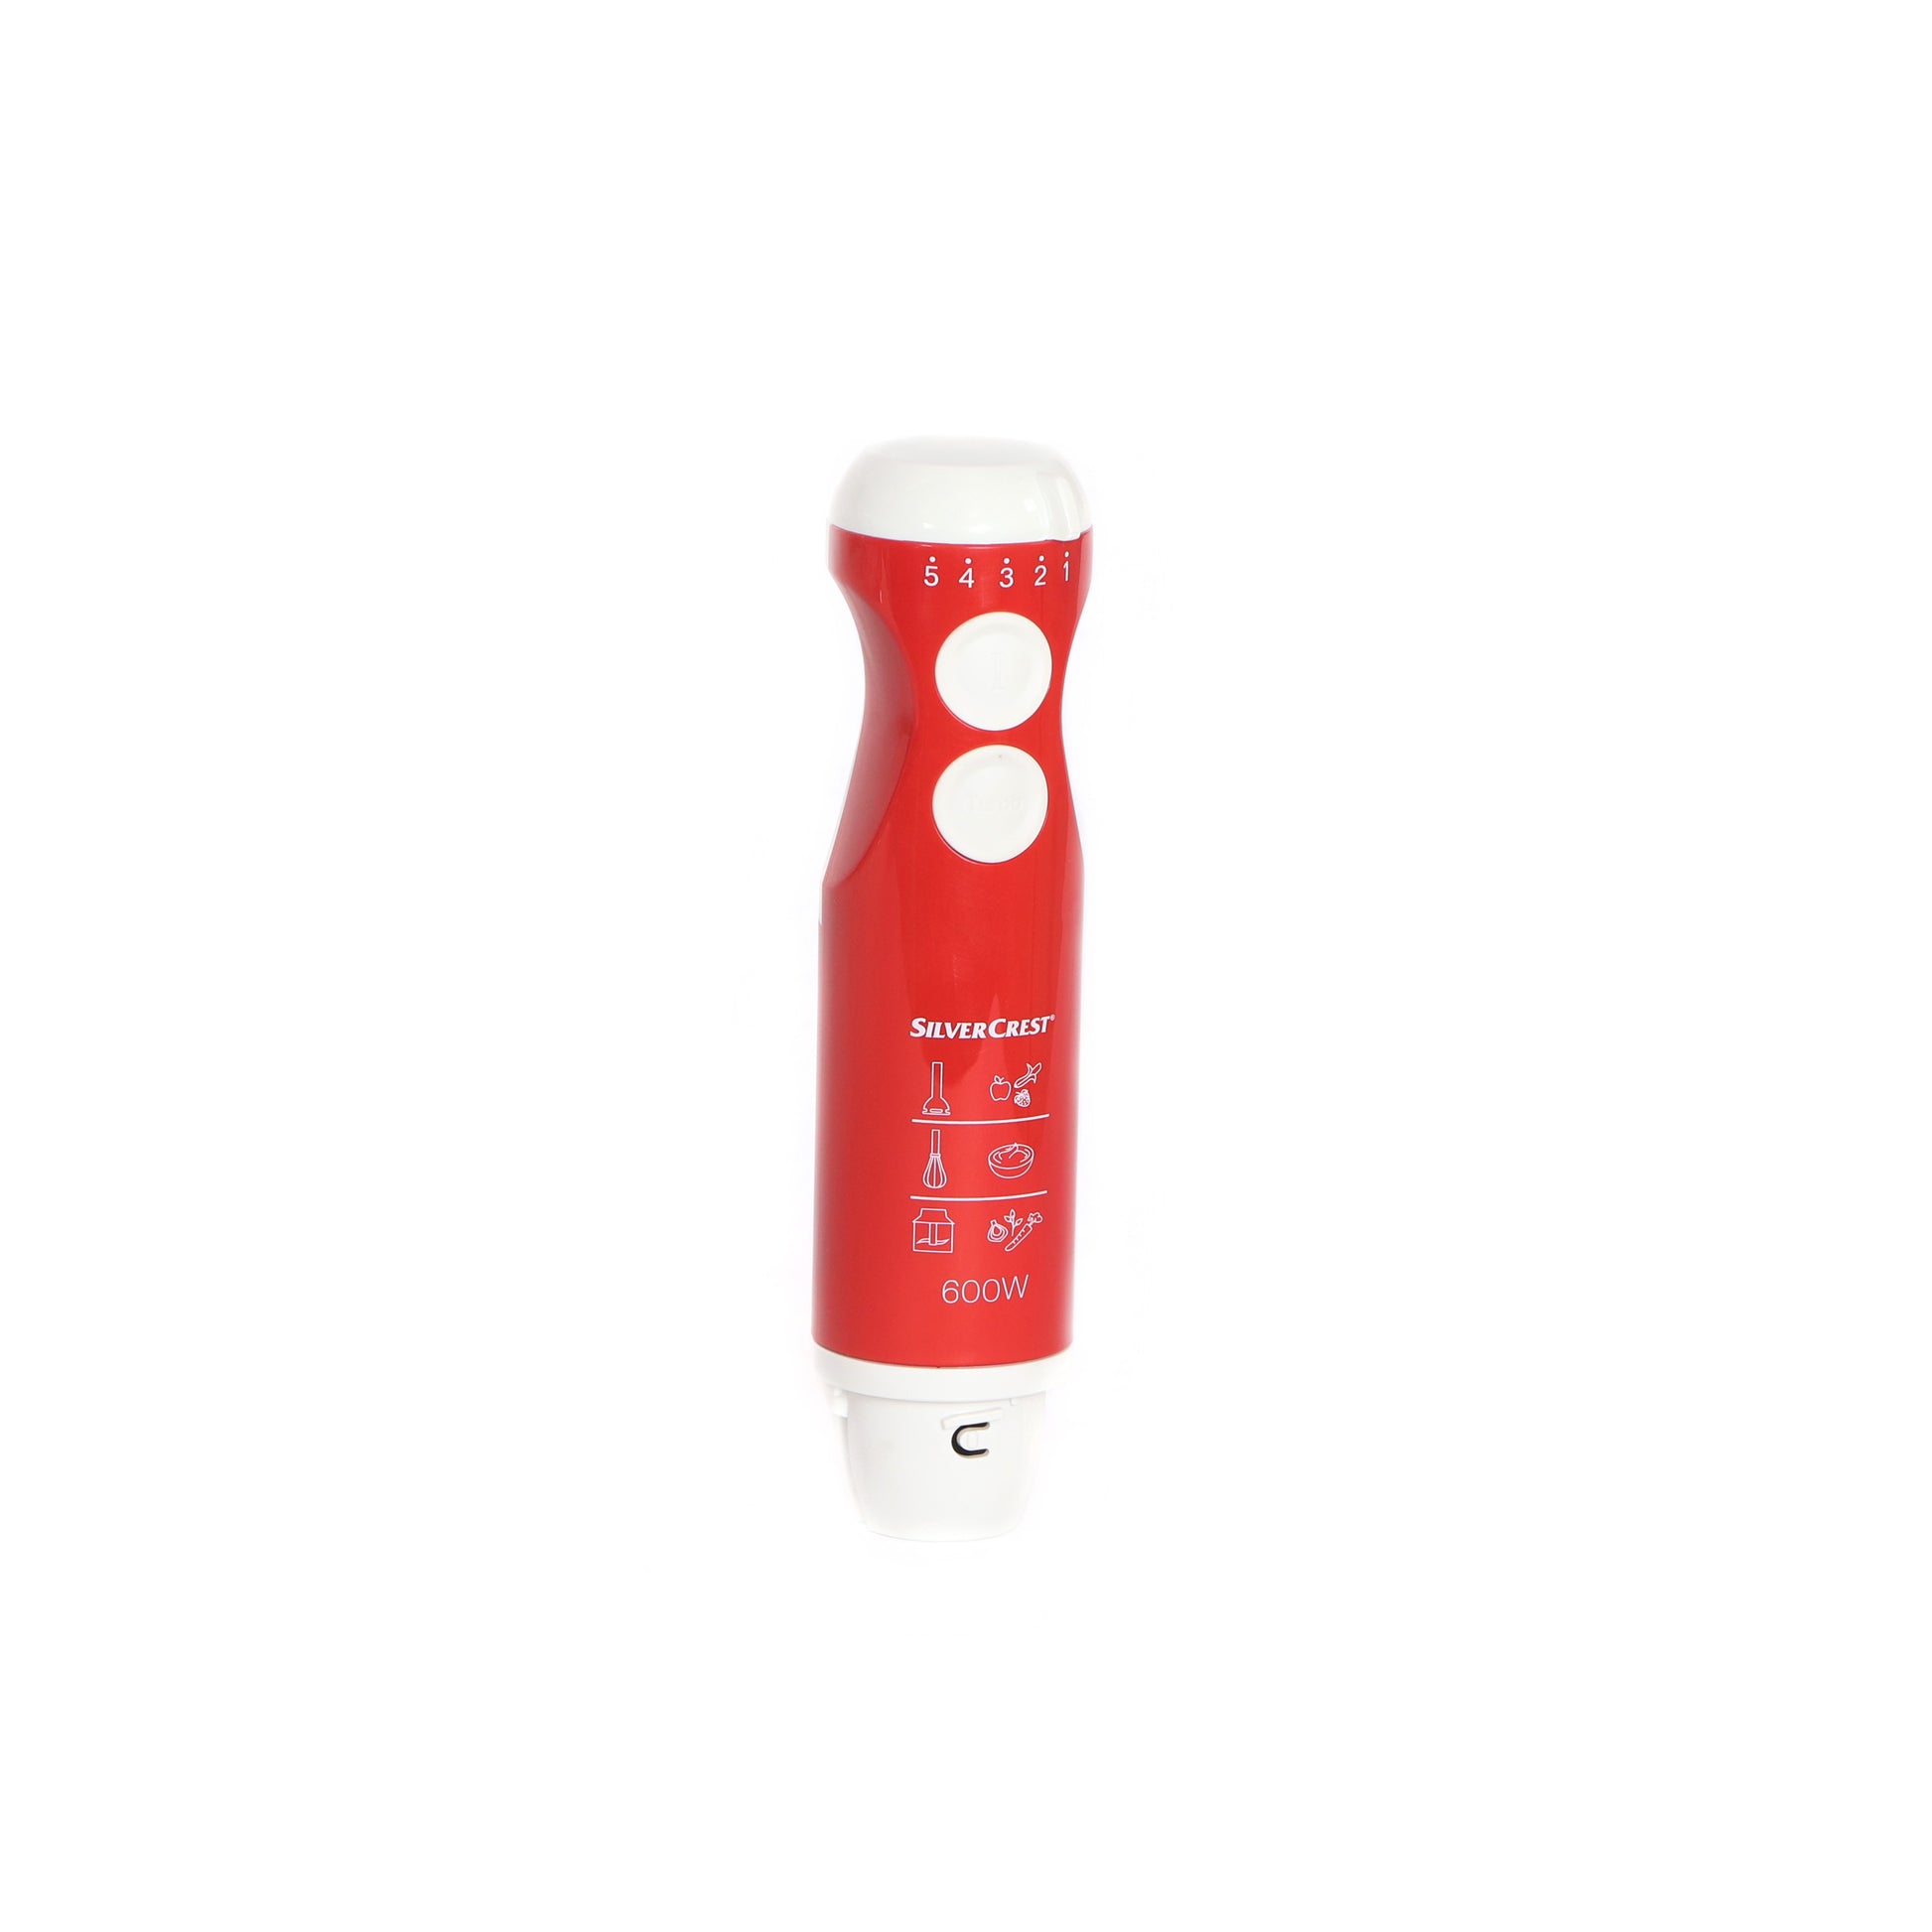 Silvercrest Powerful Hand Blender Set 600w Red-Royal Brands Co-